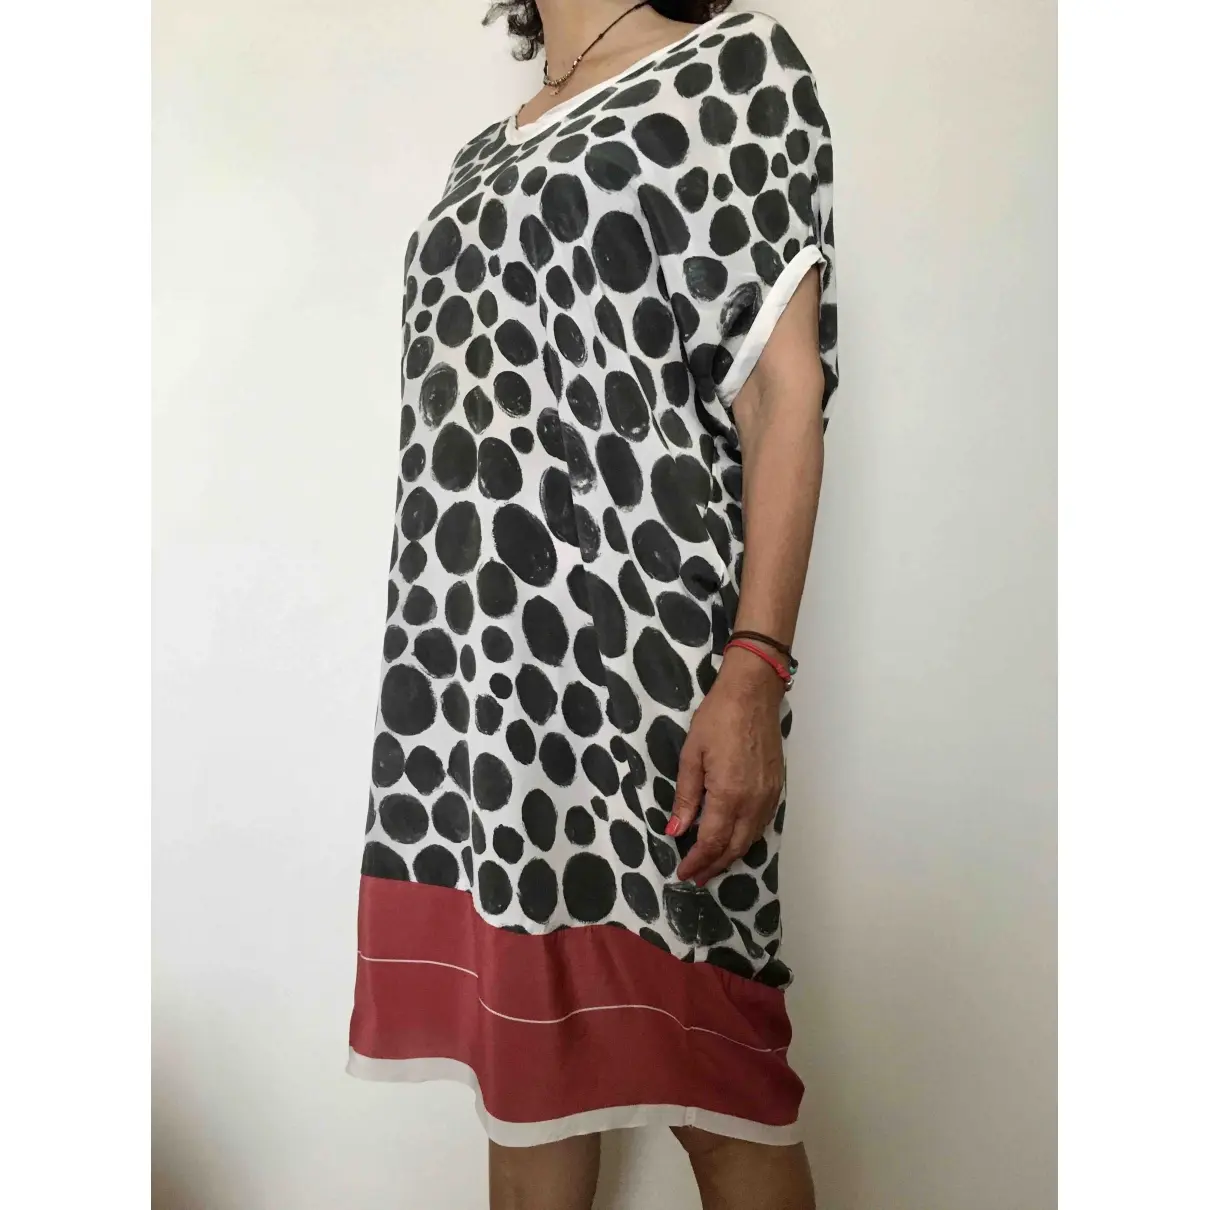 Silk mid-length dress Liviana Conti